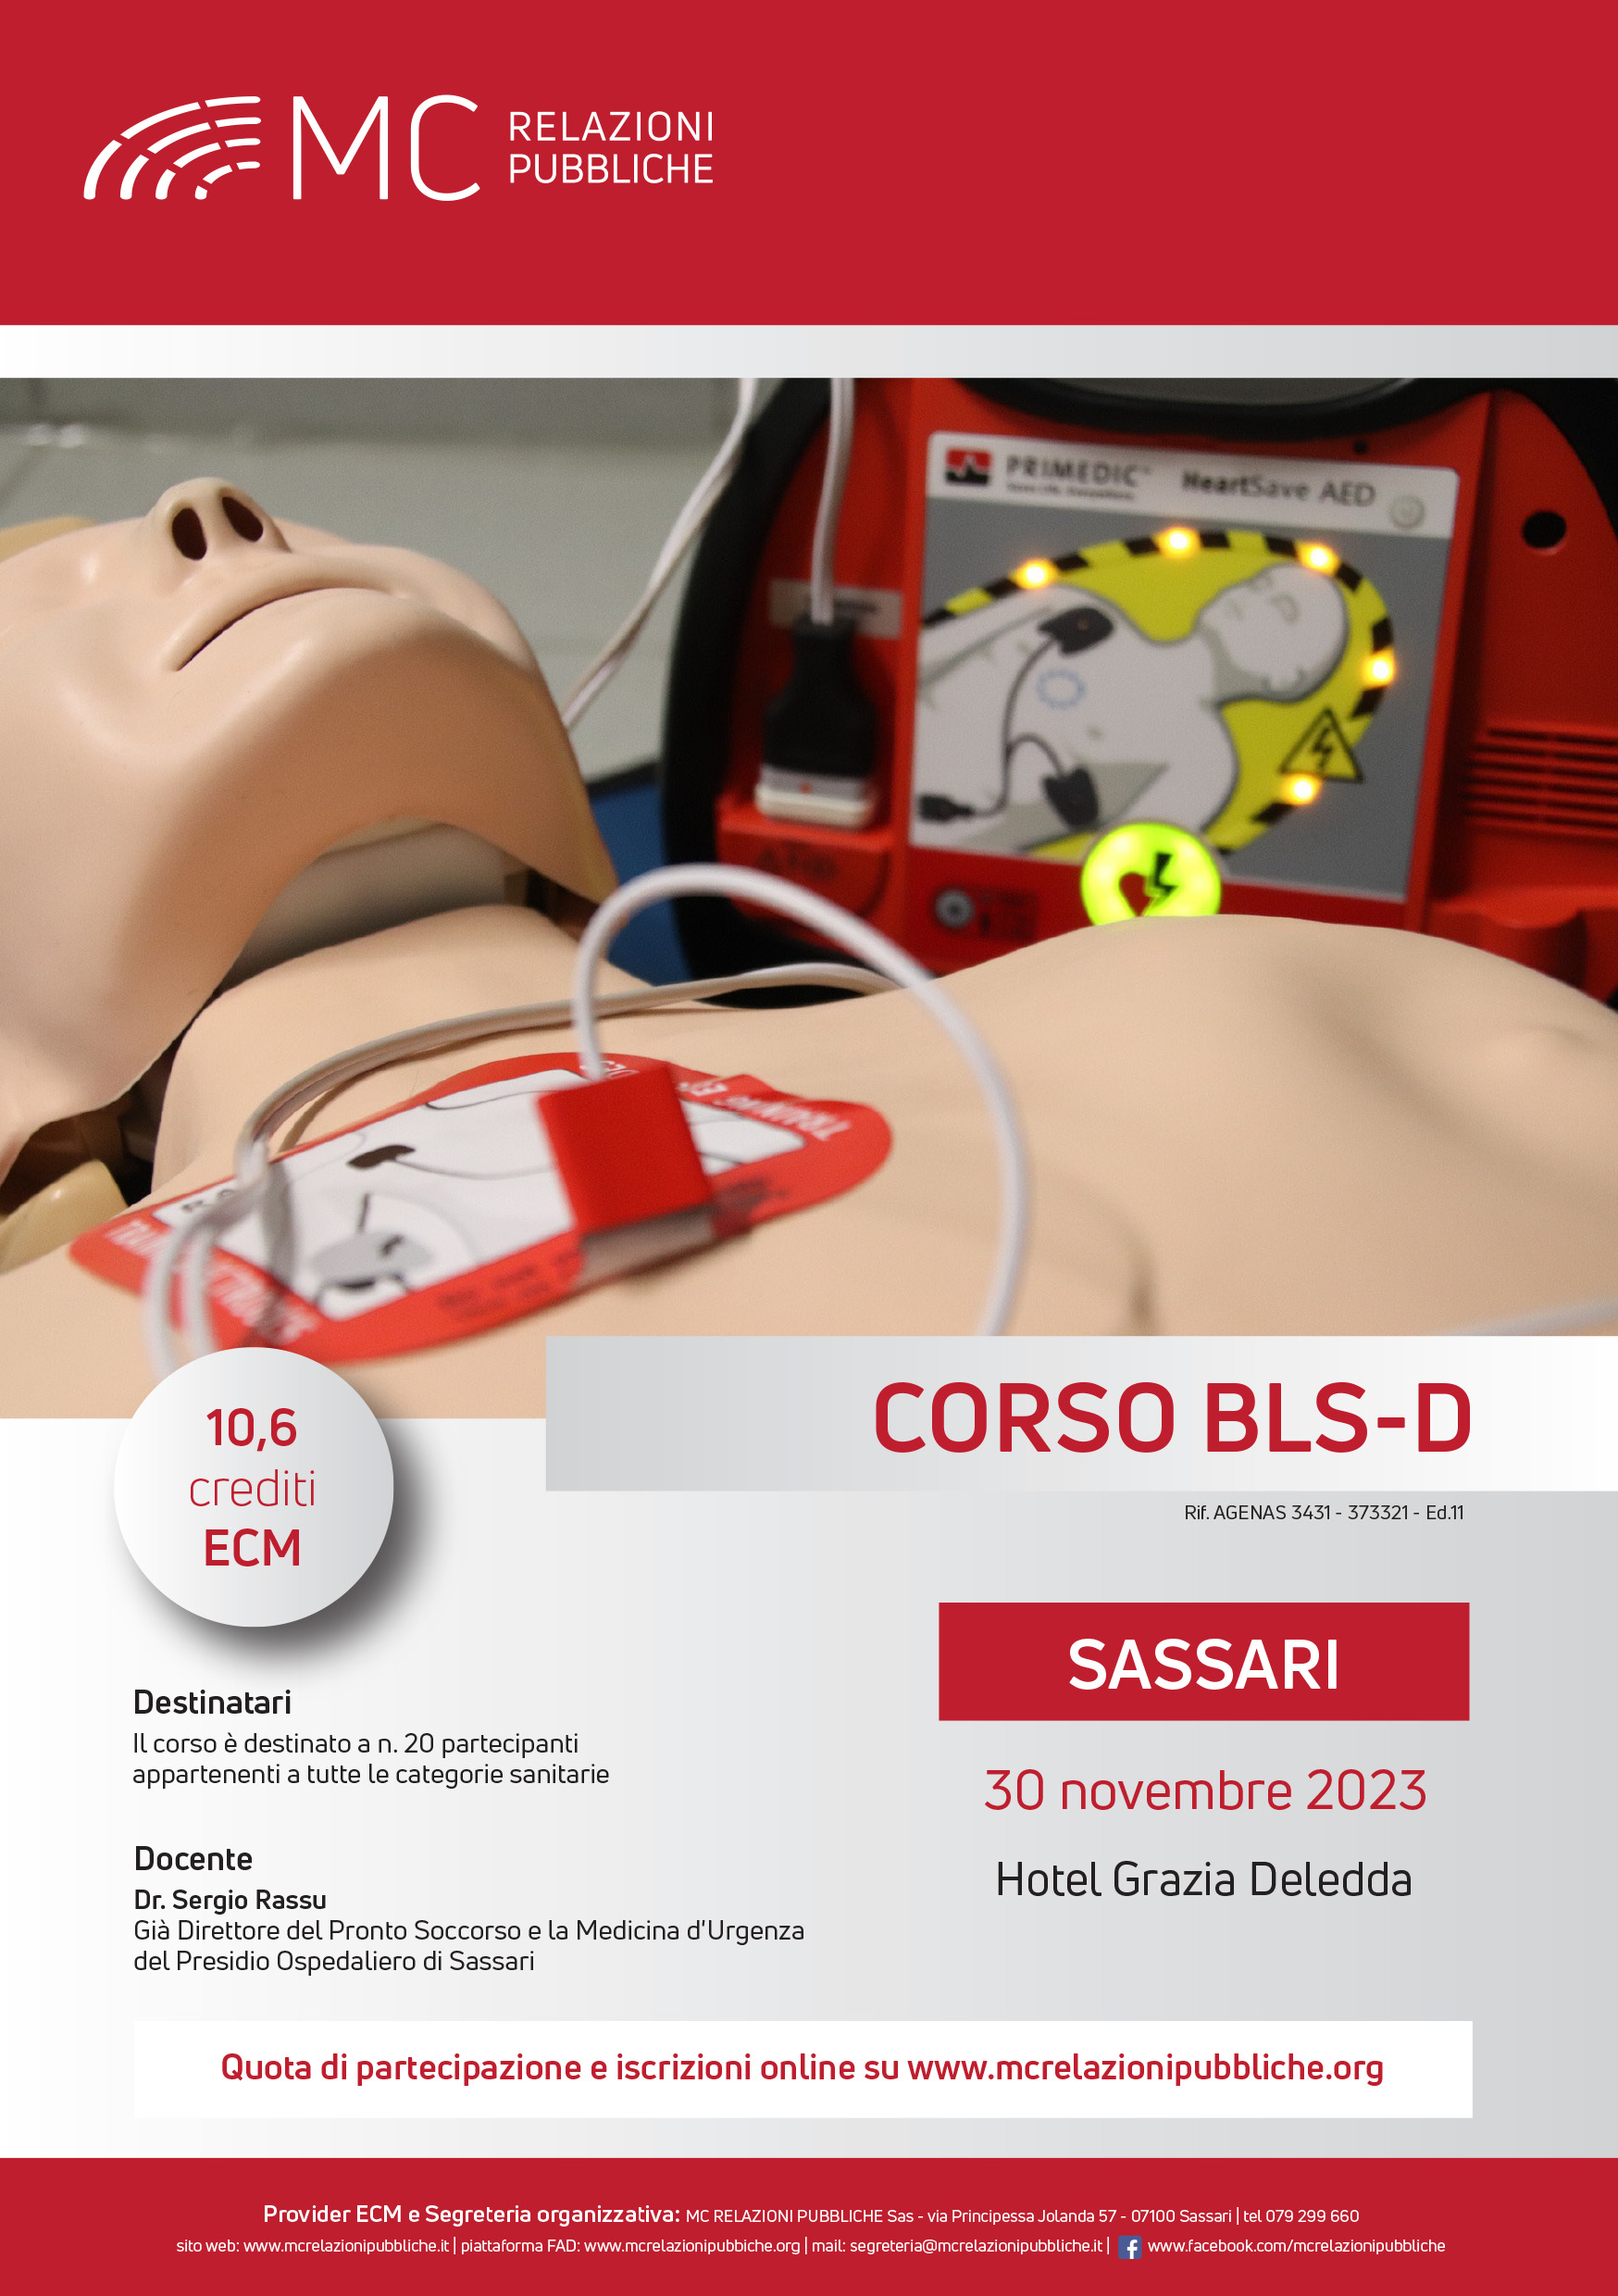 Corso BLS-D. Basic life support-defibrillation ed.11